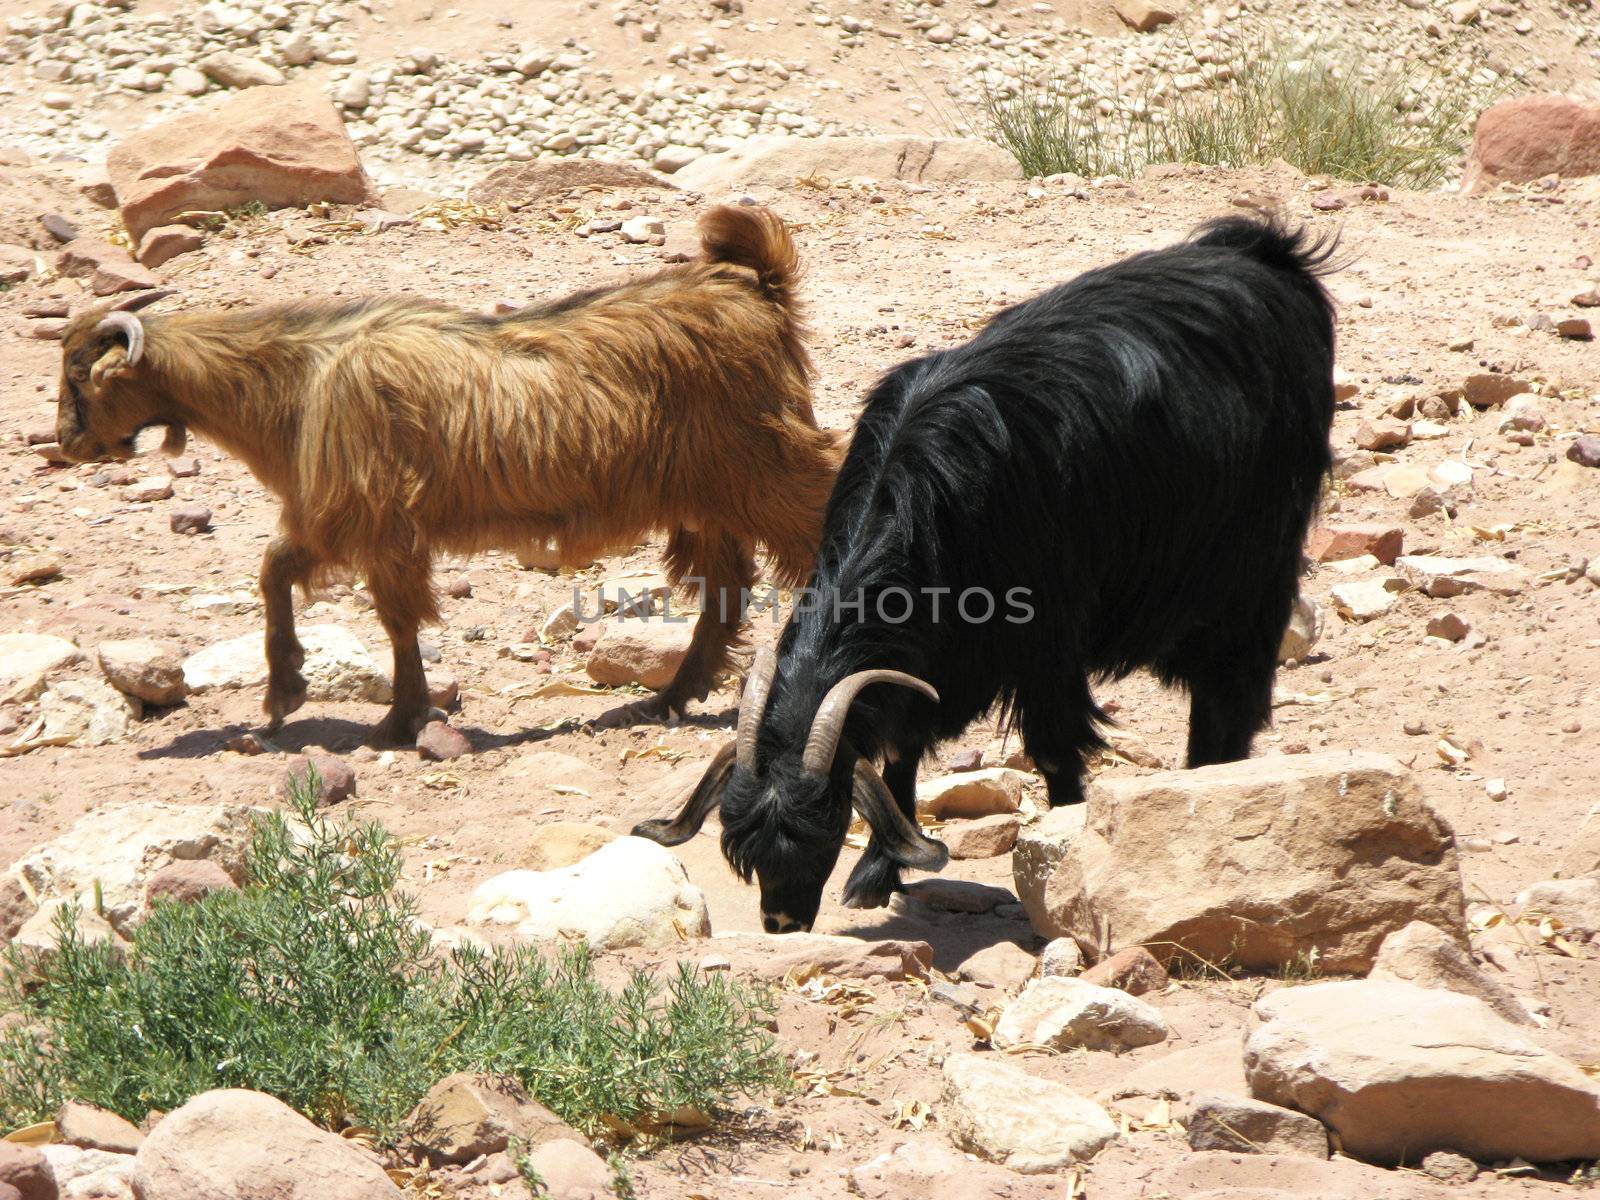 Goats in desert by vintrom